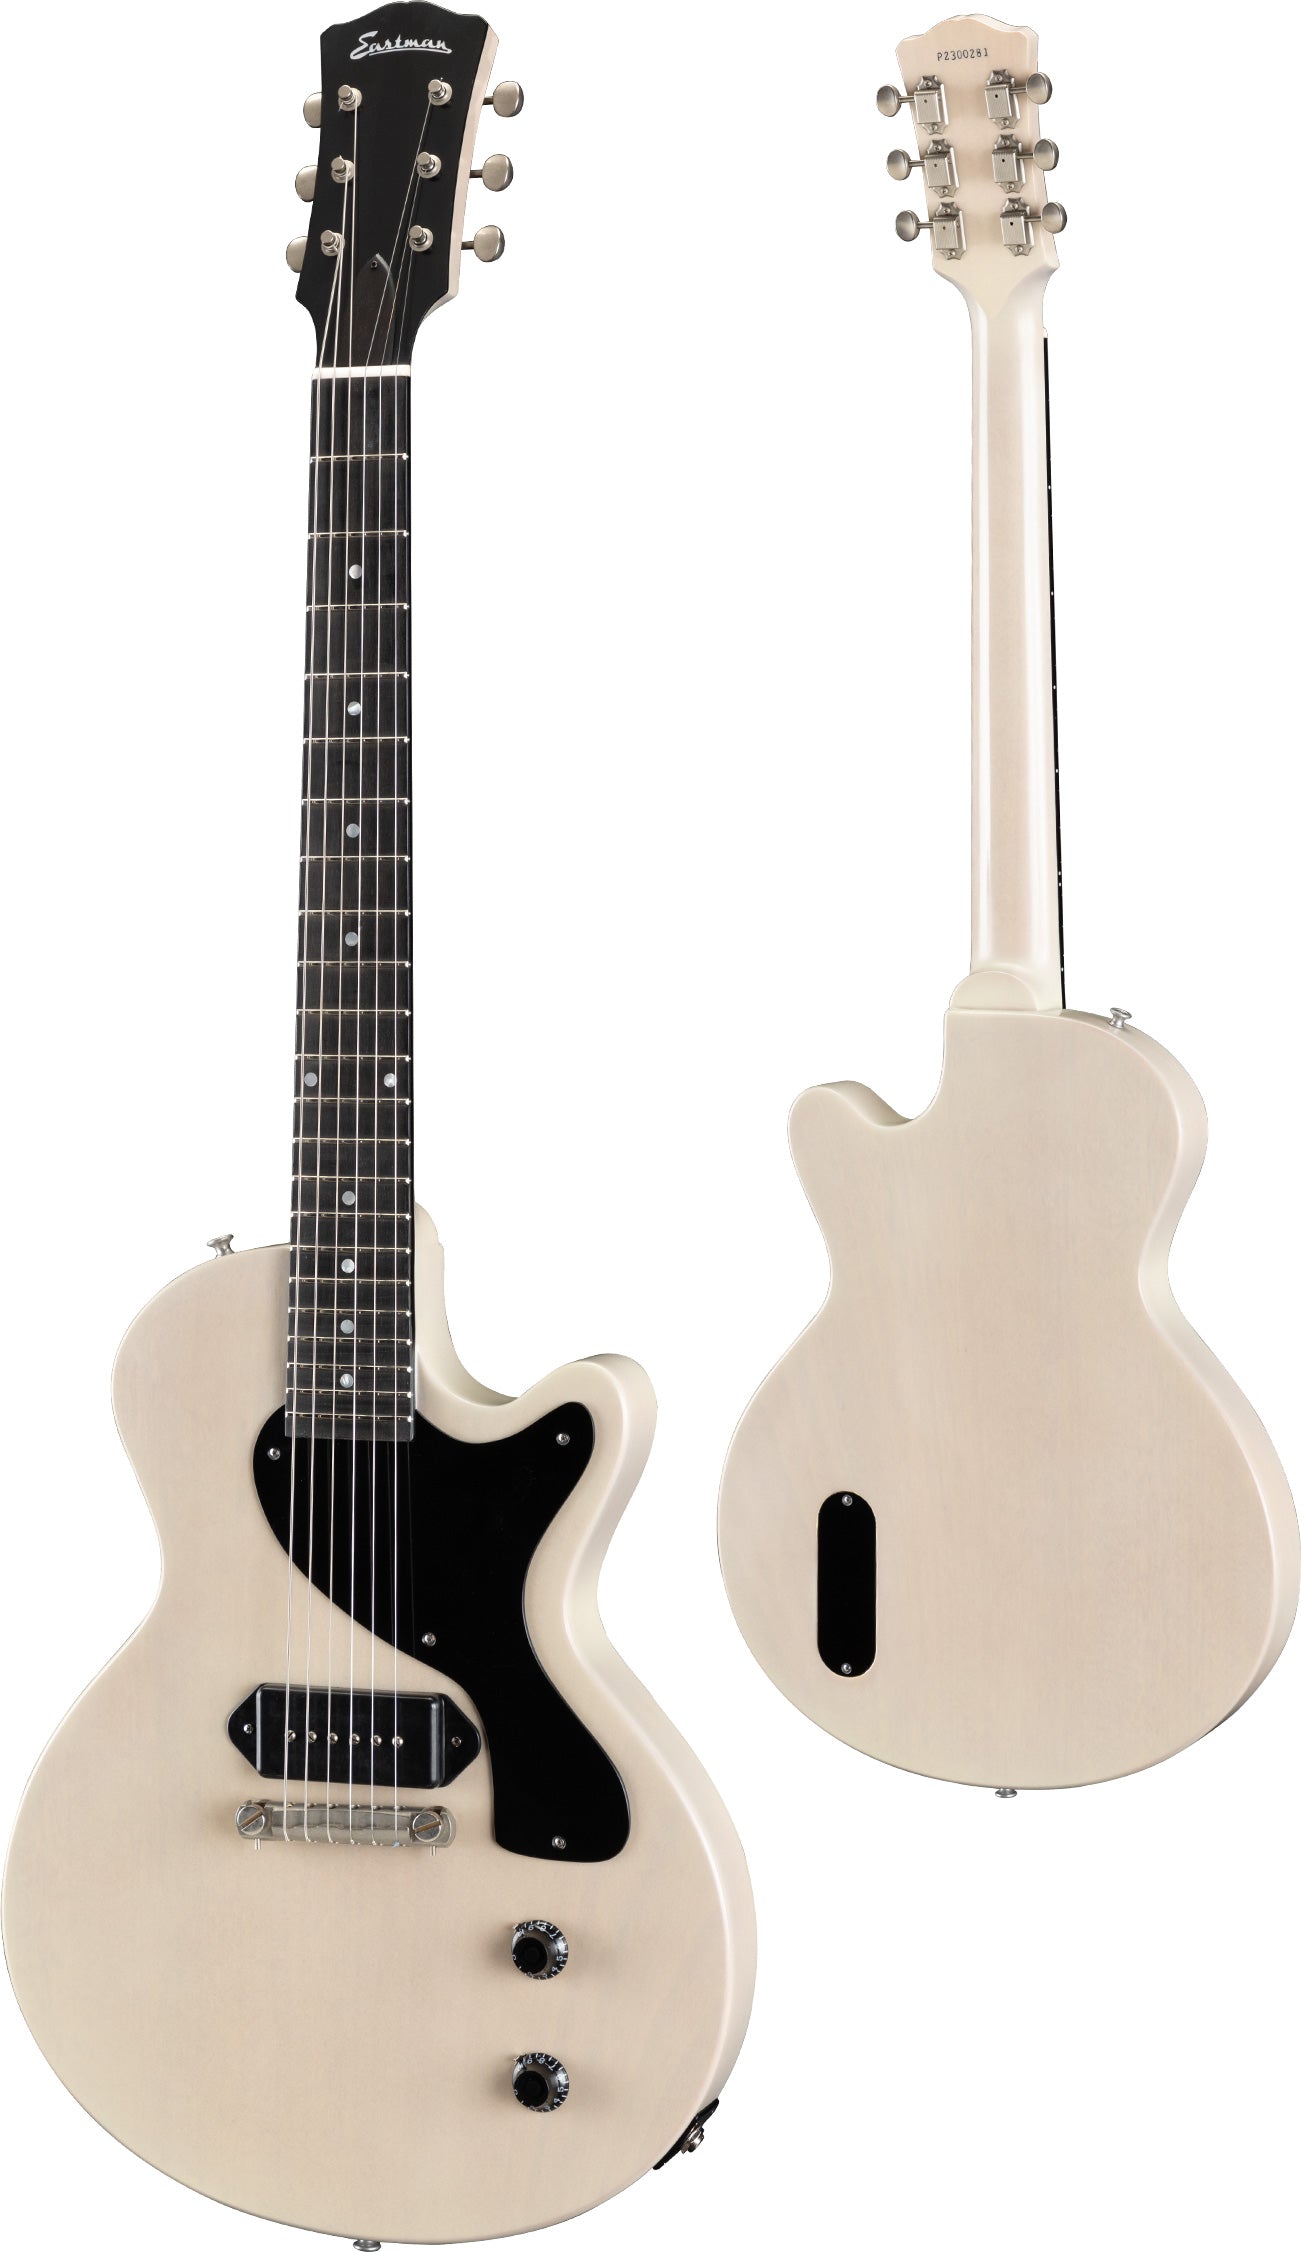 Eastman SB55/TV-LTD-PB Pomona Blonder, Electric Guitar for sale at Richards Guitars.